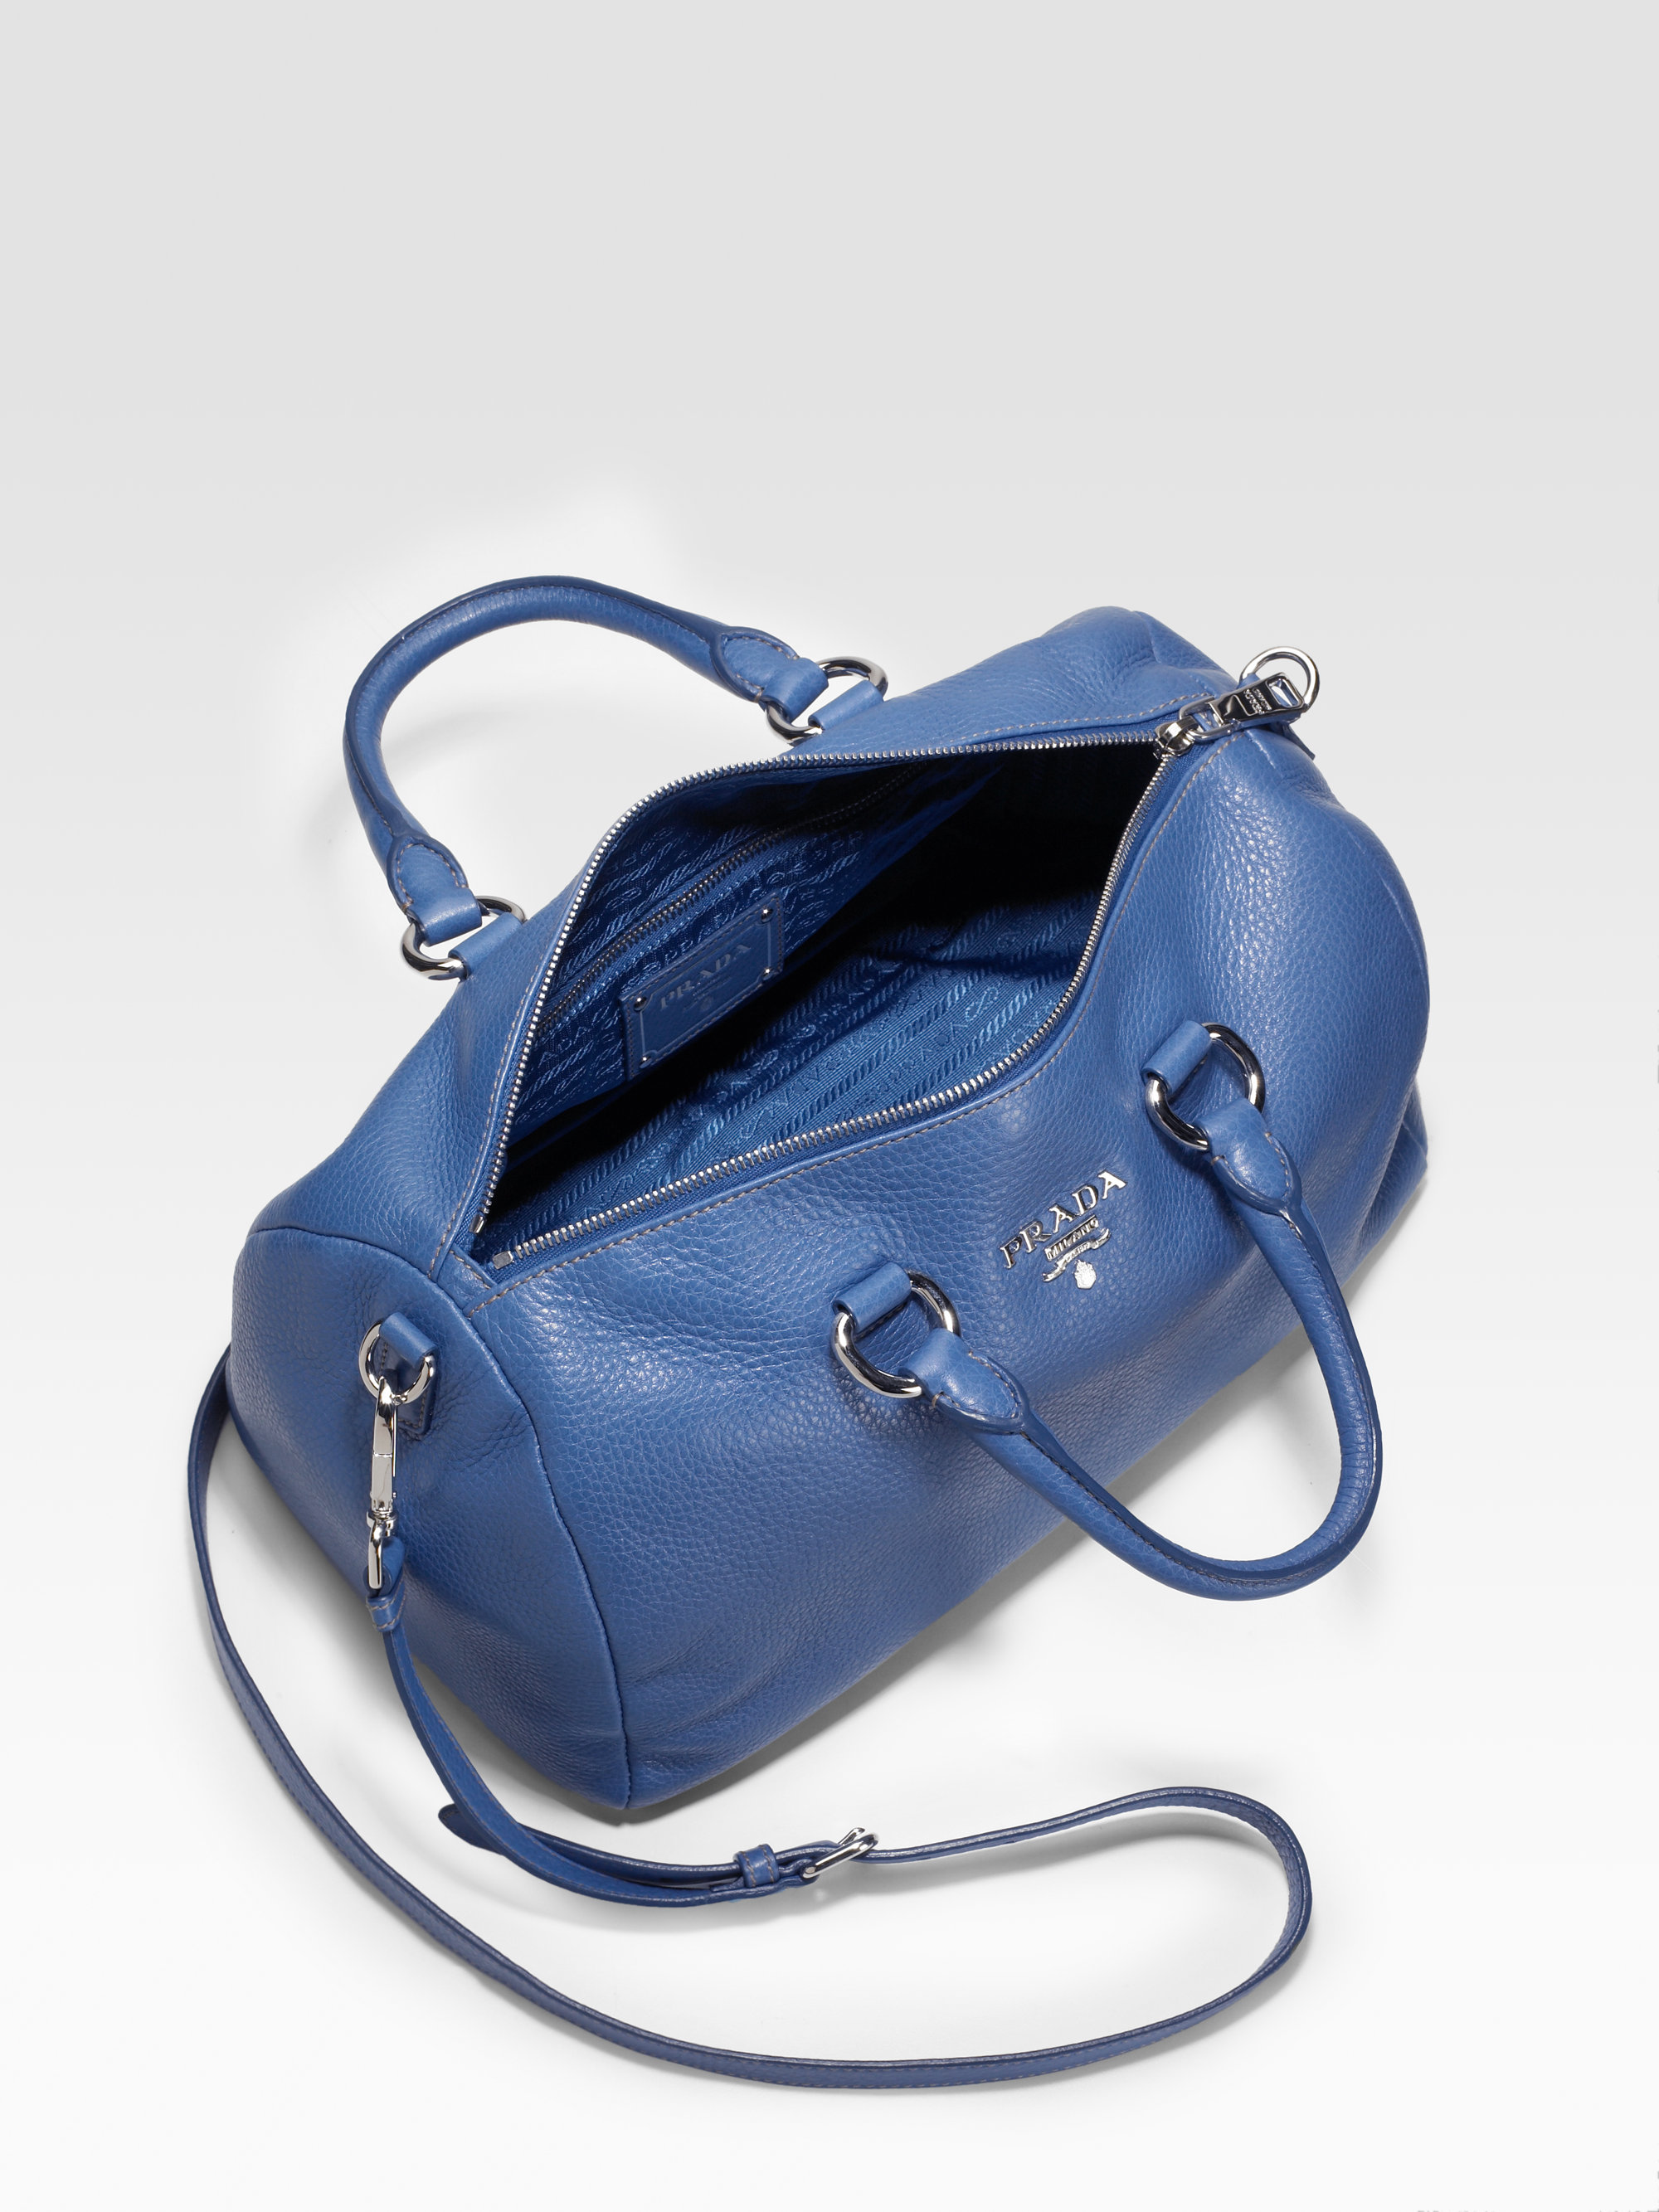 celine online shop usa - prada leather satchel